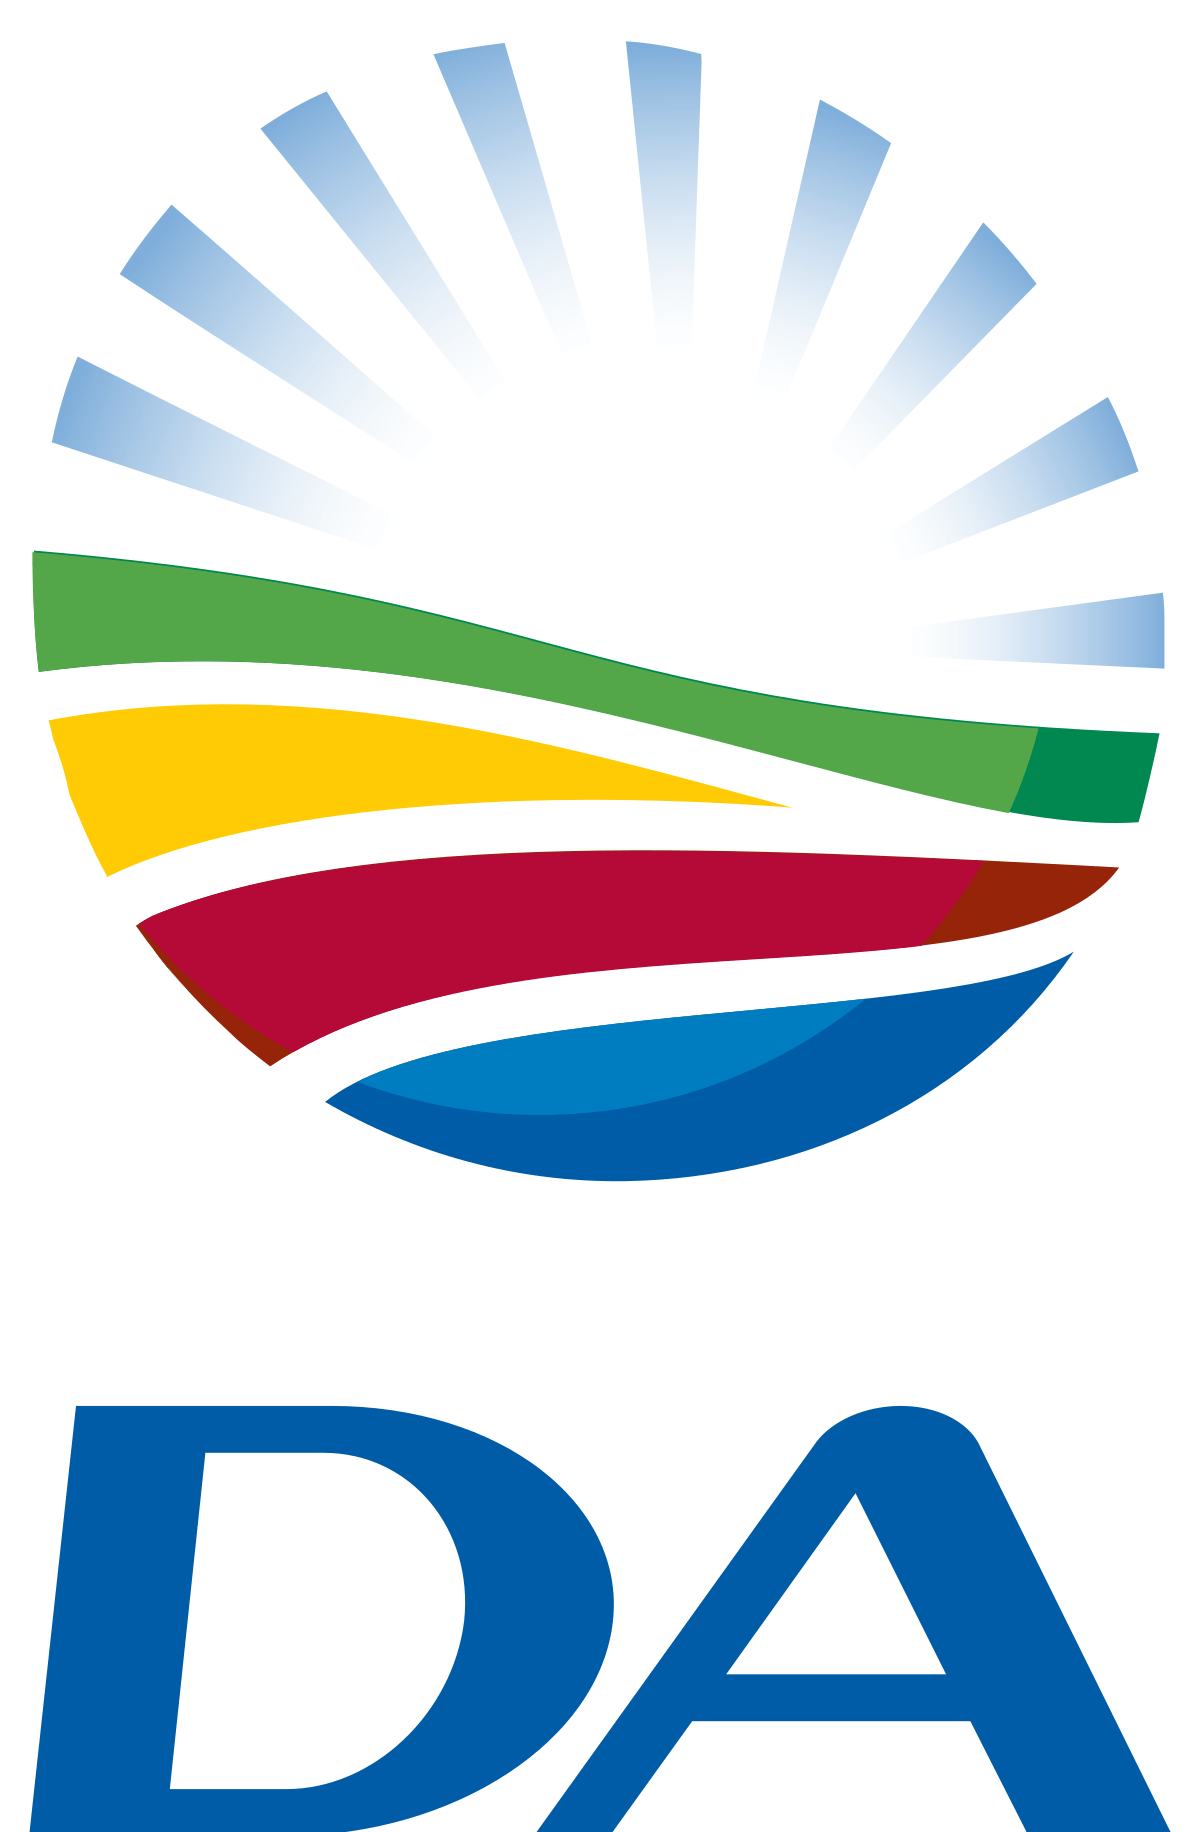 Da Logo - DisruptAfrica DA Logo On Transparent With Tag Small Logo Image